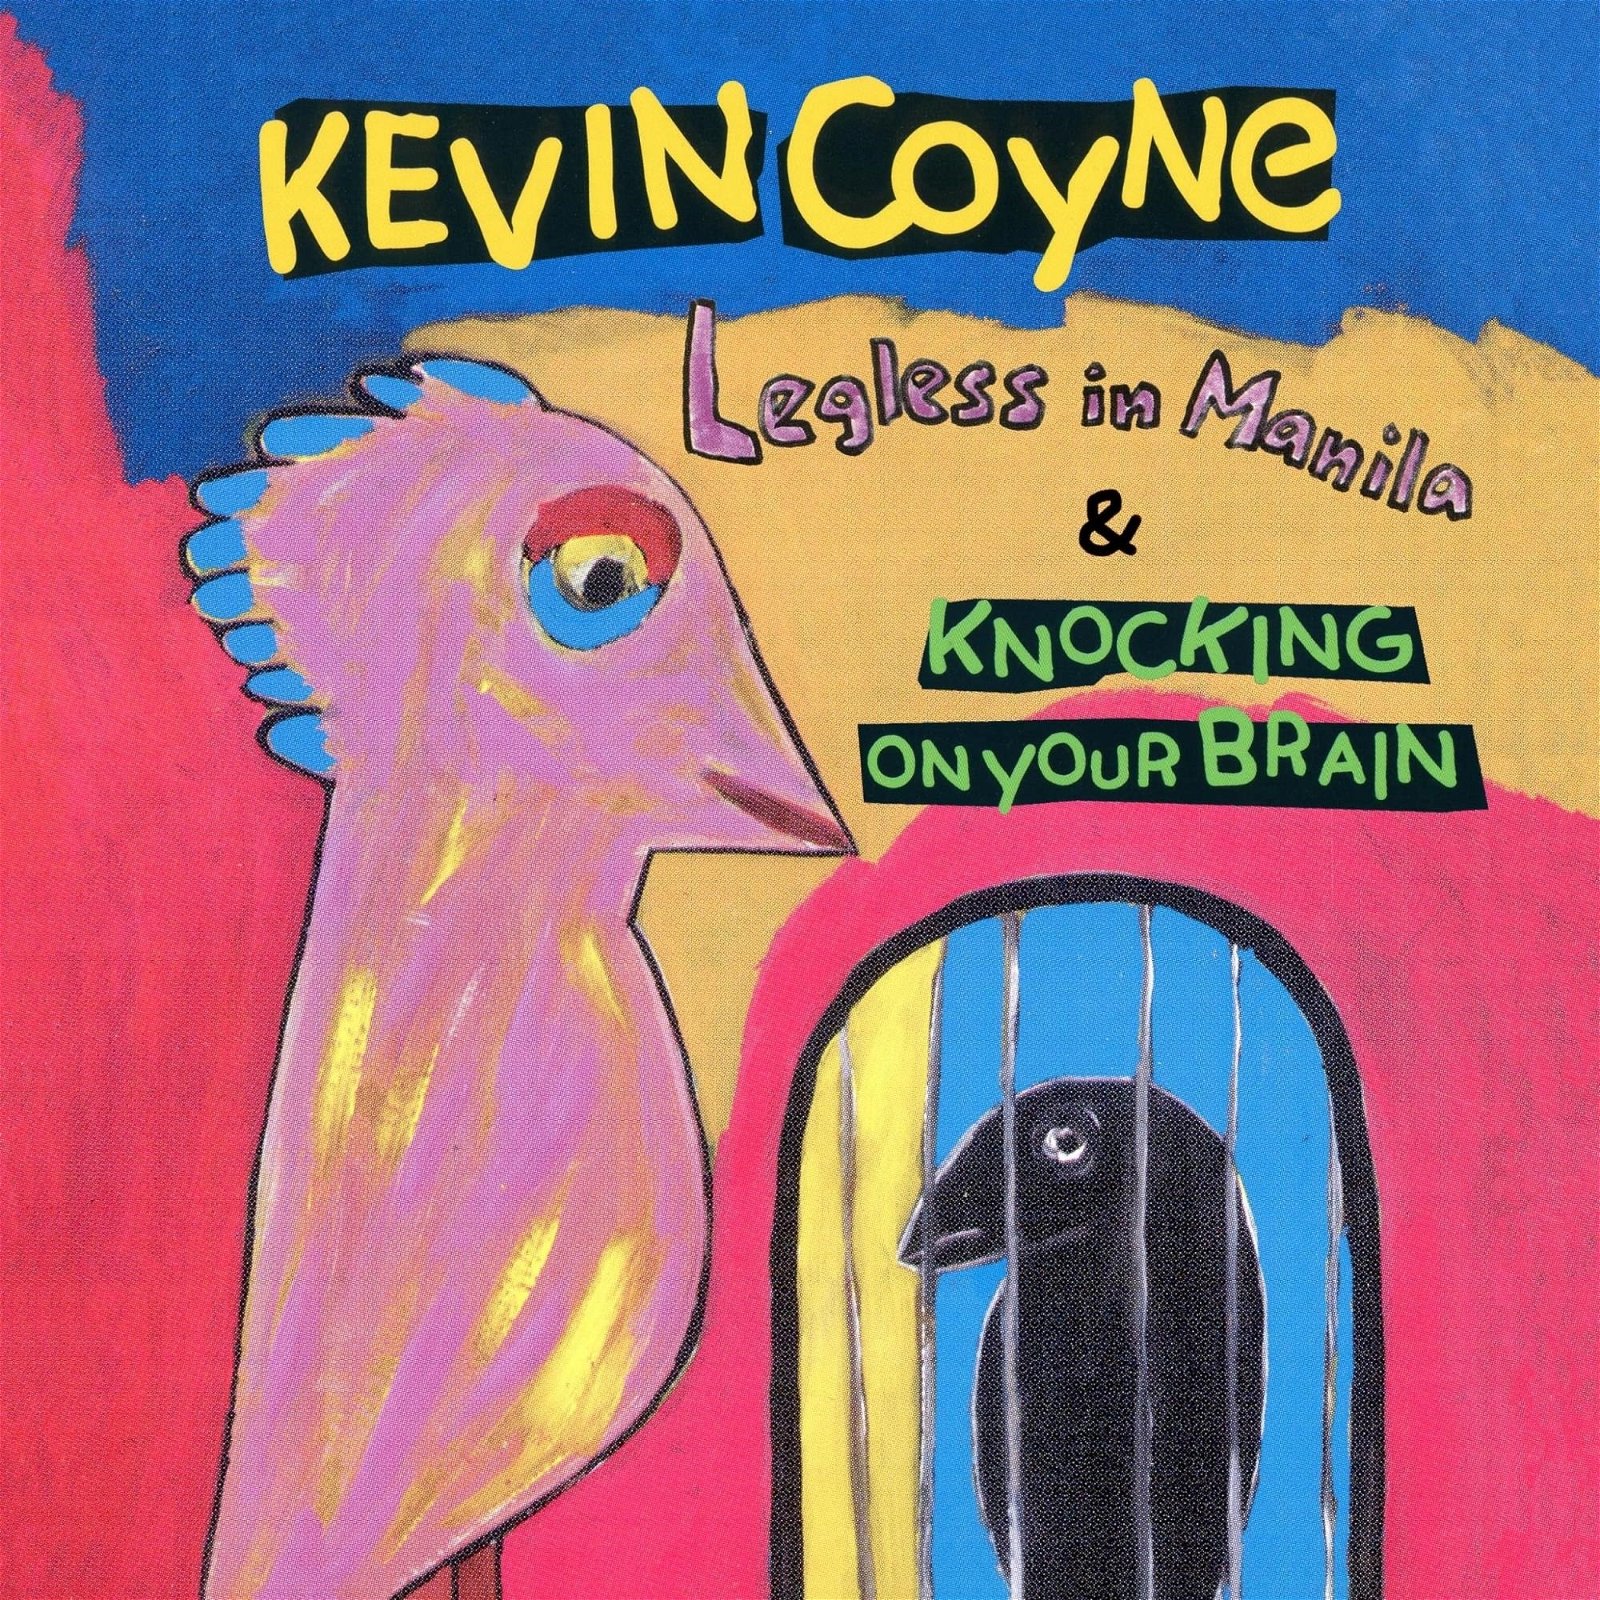 CD Shop - COYNE, KEVIN LEGLESS IN MANILA & KNOCKING ON YOUR BRAIN